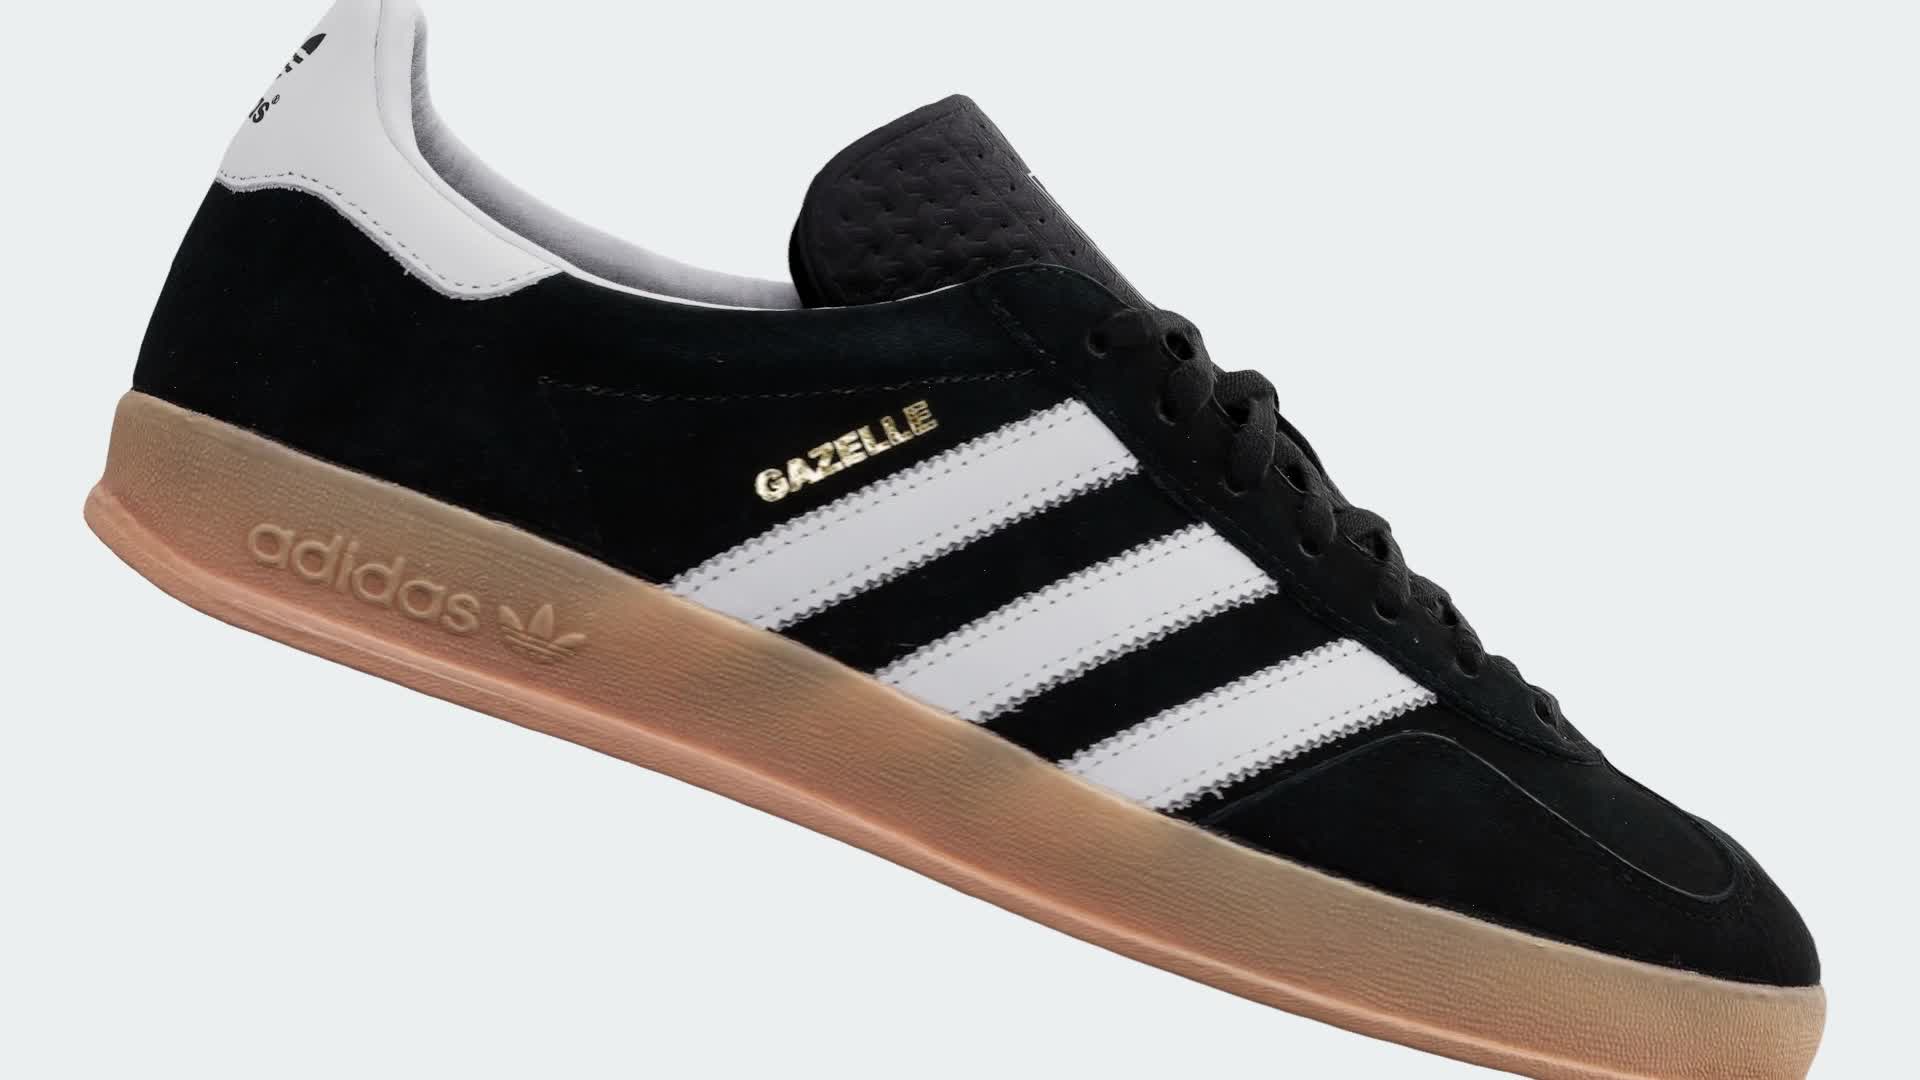 ADIDAS ORIGINALS Gazelle Indoor Leather-Trimmed Suede Sneakers for Men